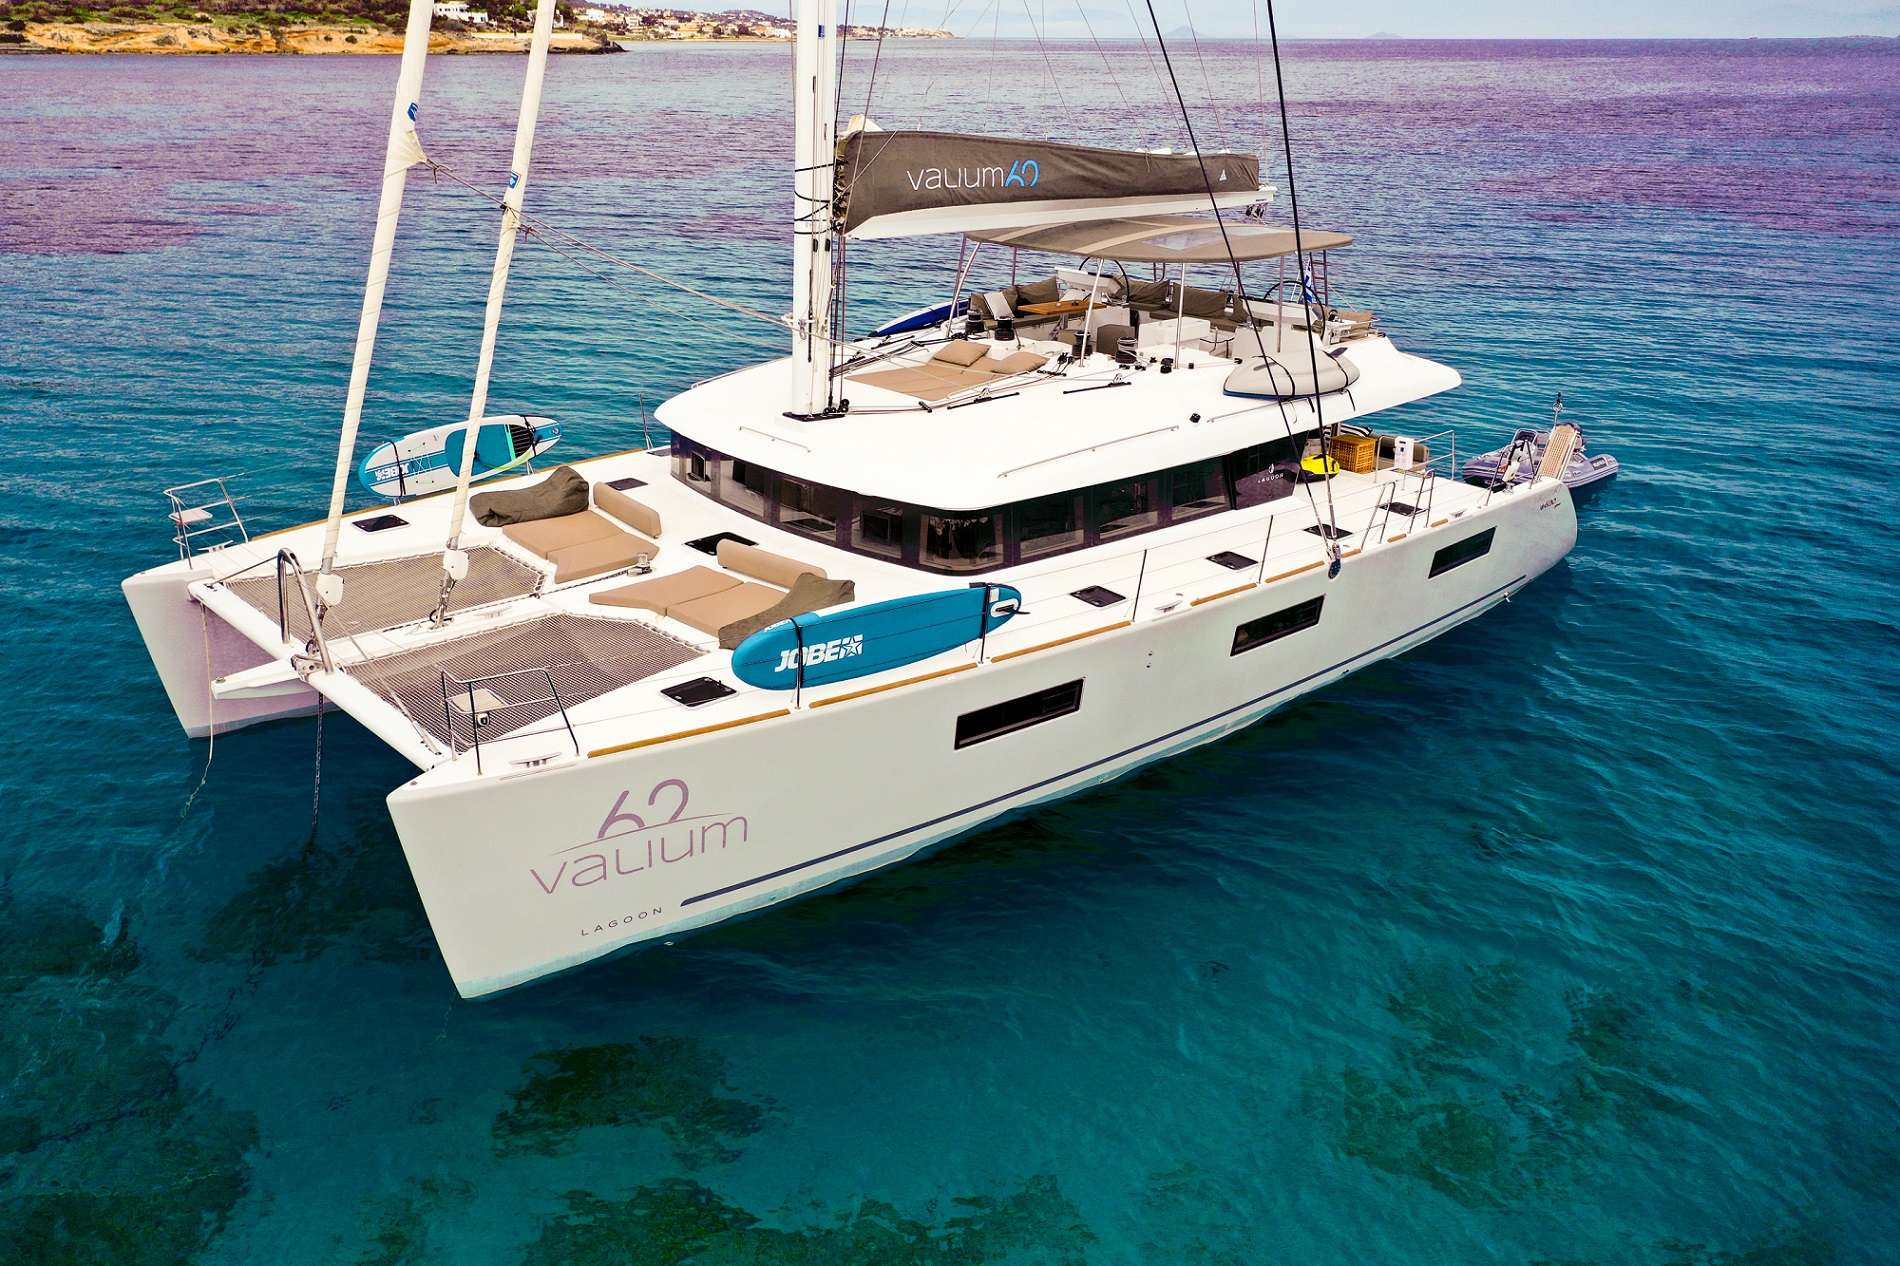 valium62 - Catamaran charter Lefkada & Boat hire in Greece 2